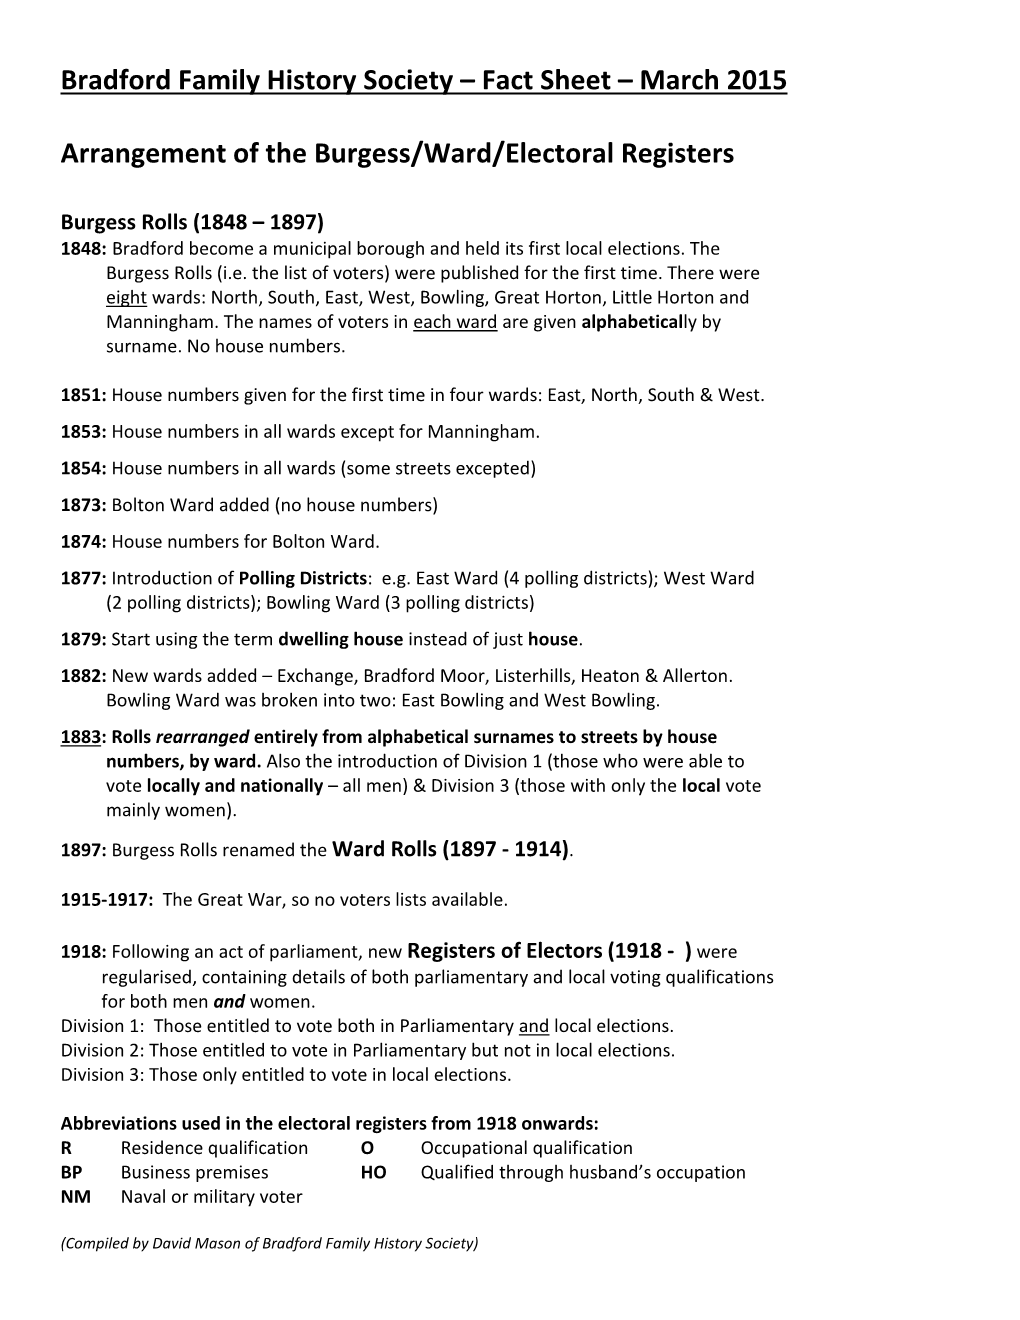 Arrangement of the Registers